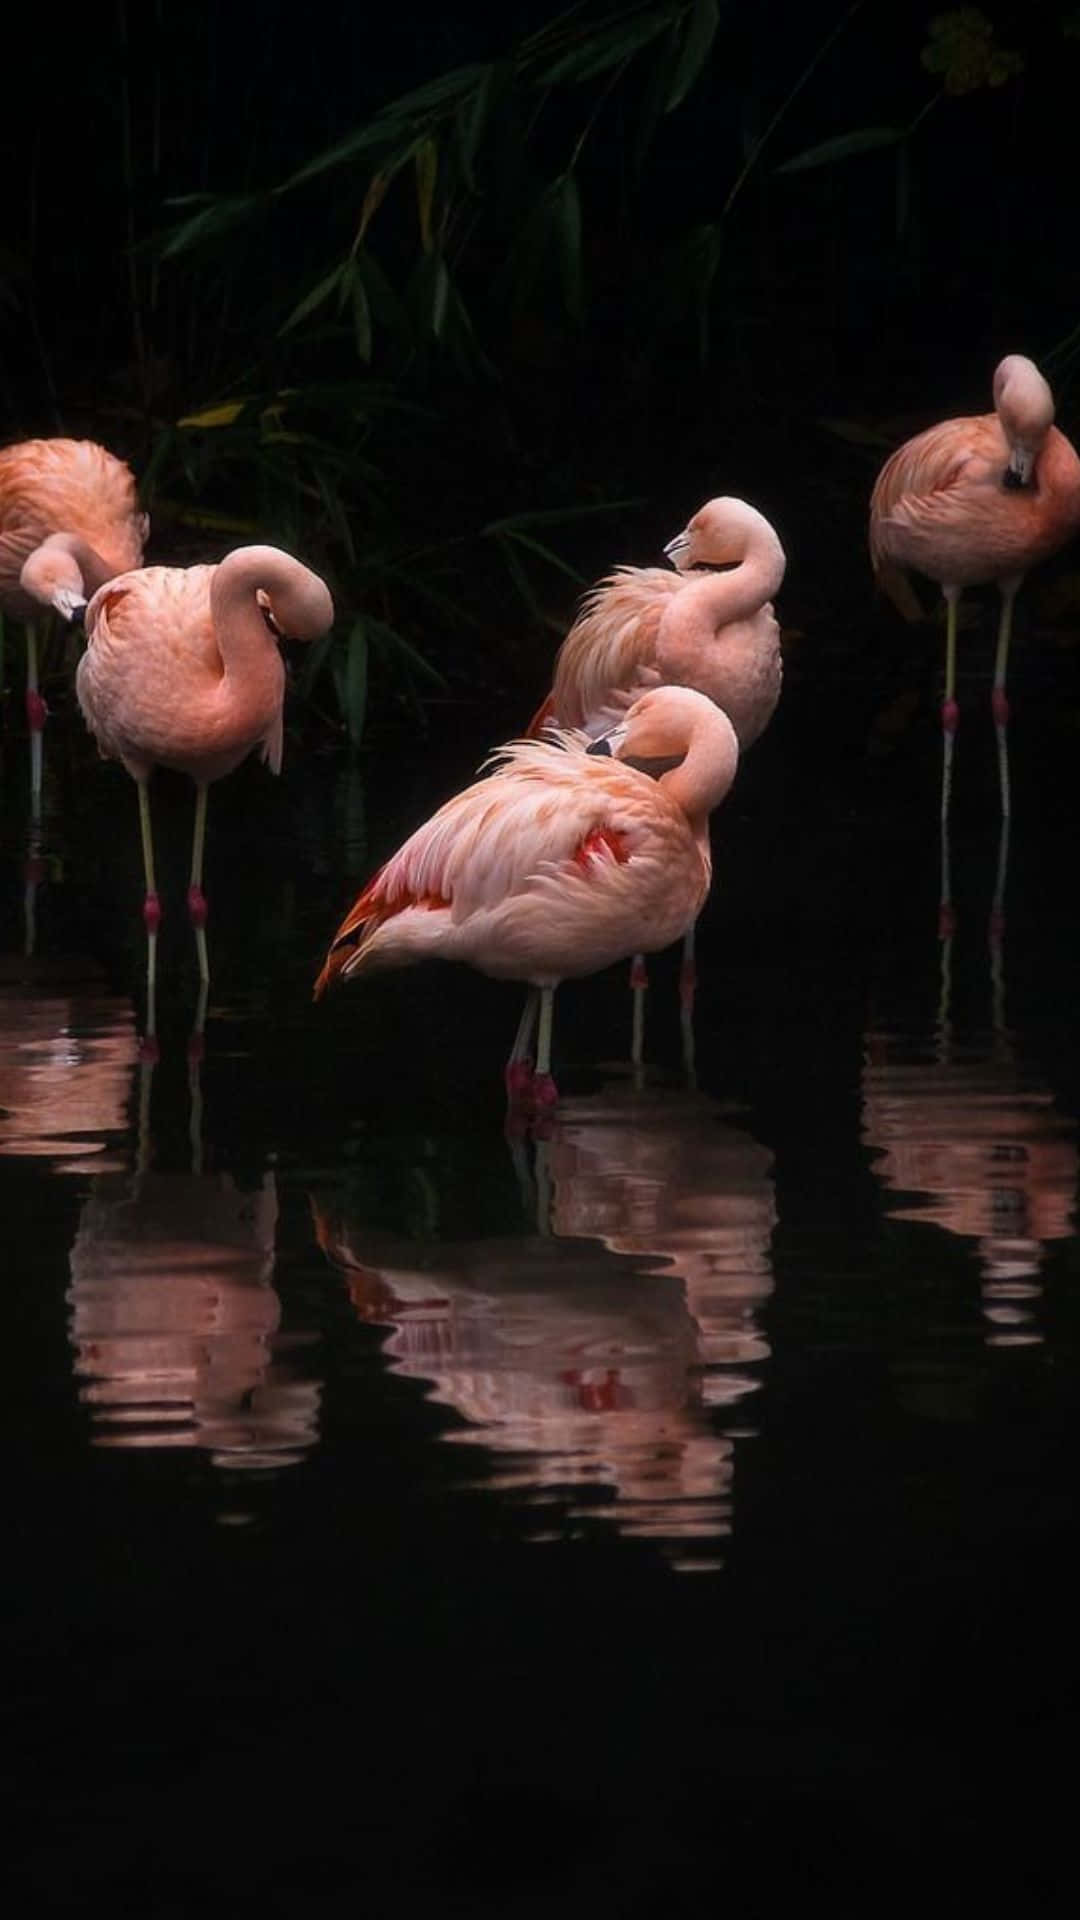 Fotografi Flamingo Iphone 1080 X 1920 Wallpaper